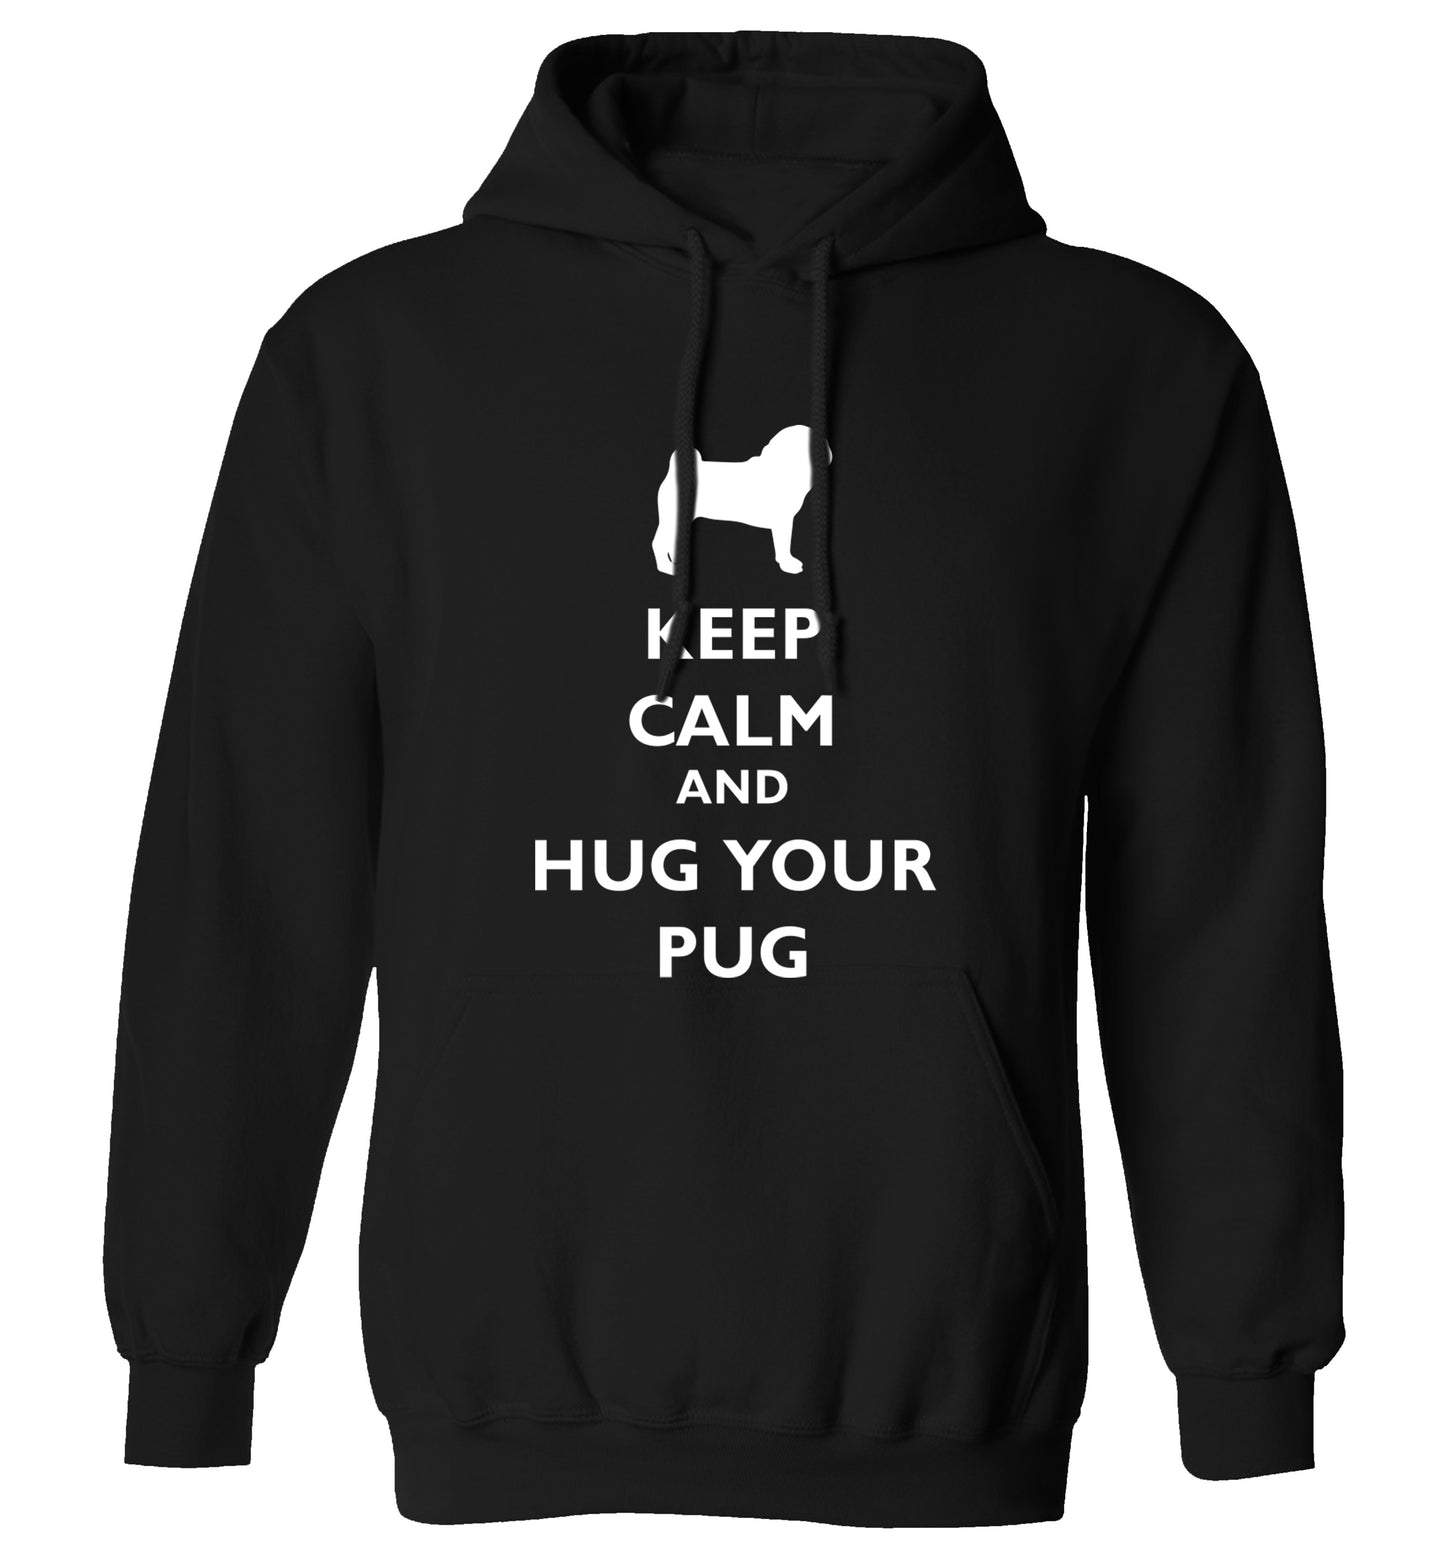 Keep calm and hug your pug adults unisex black hoodie 2XL